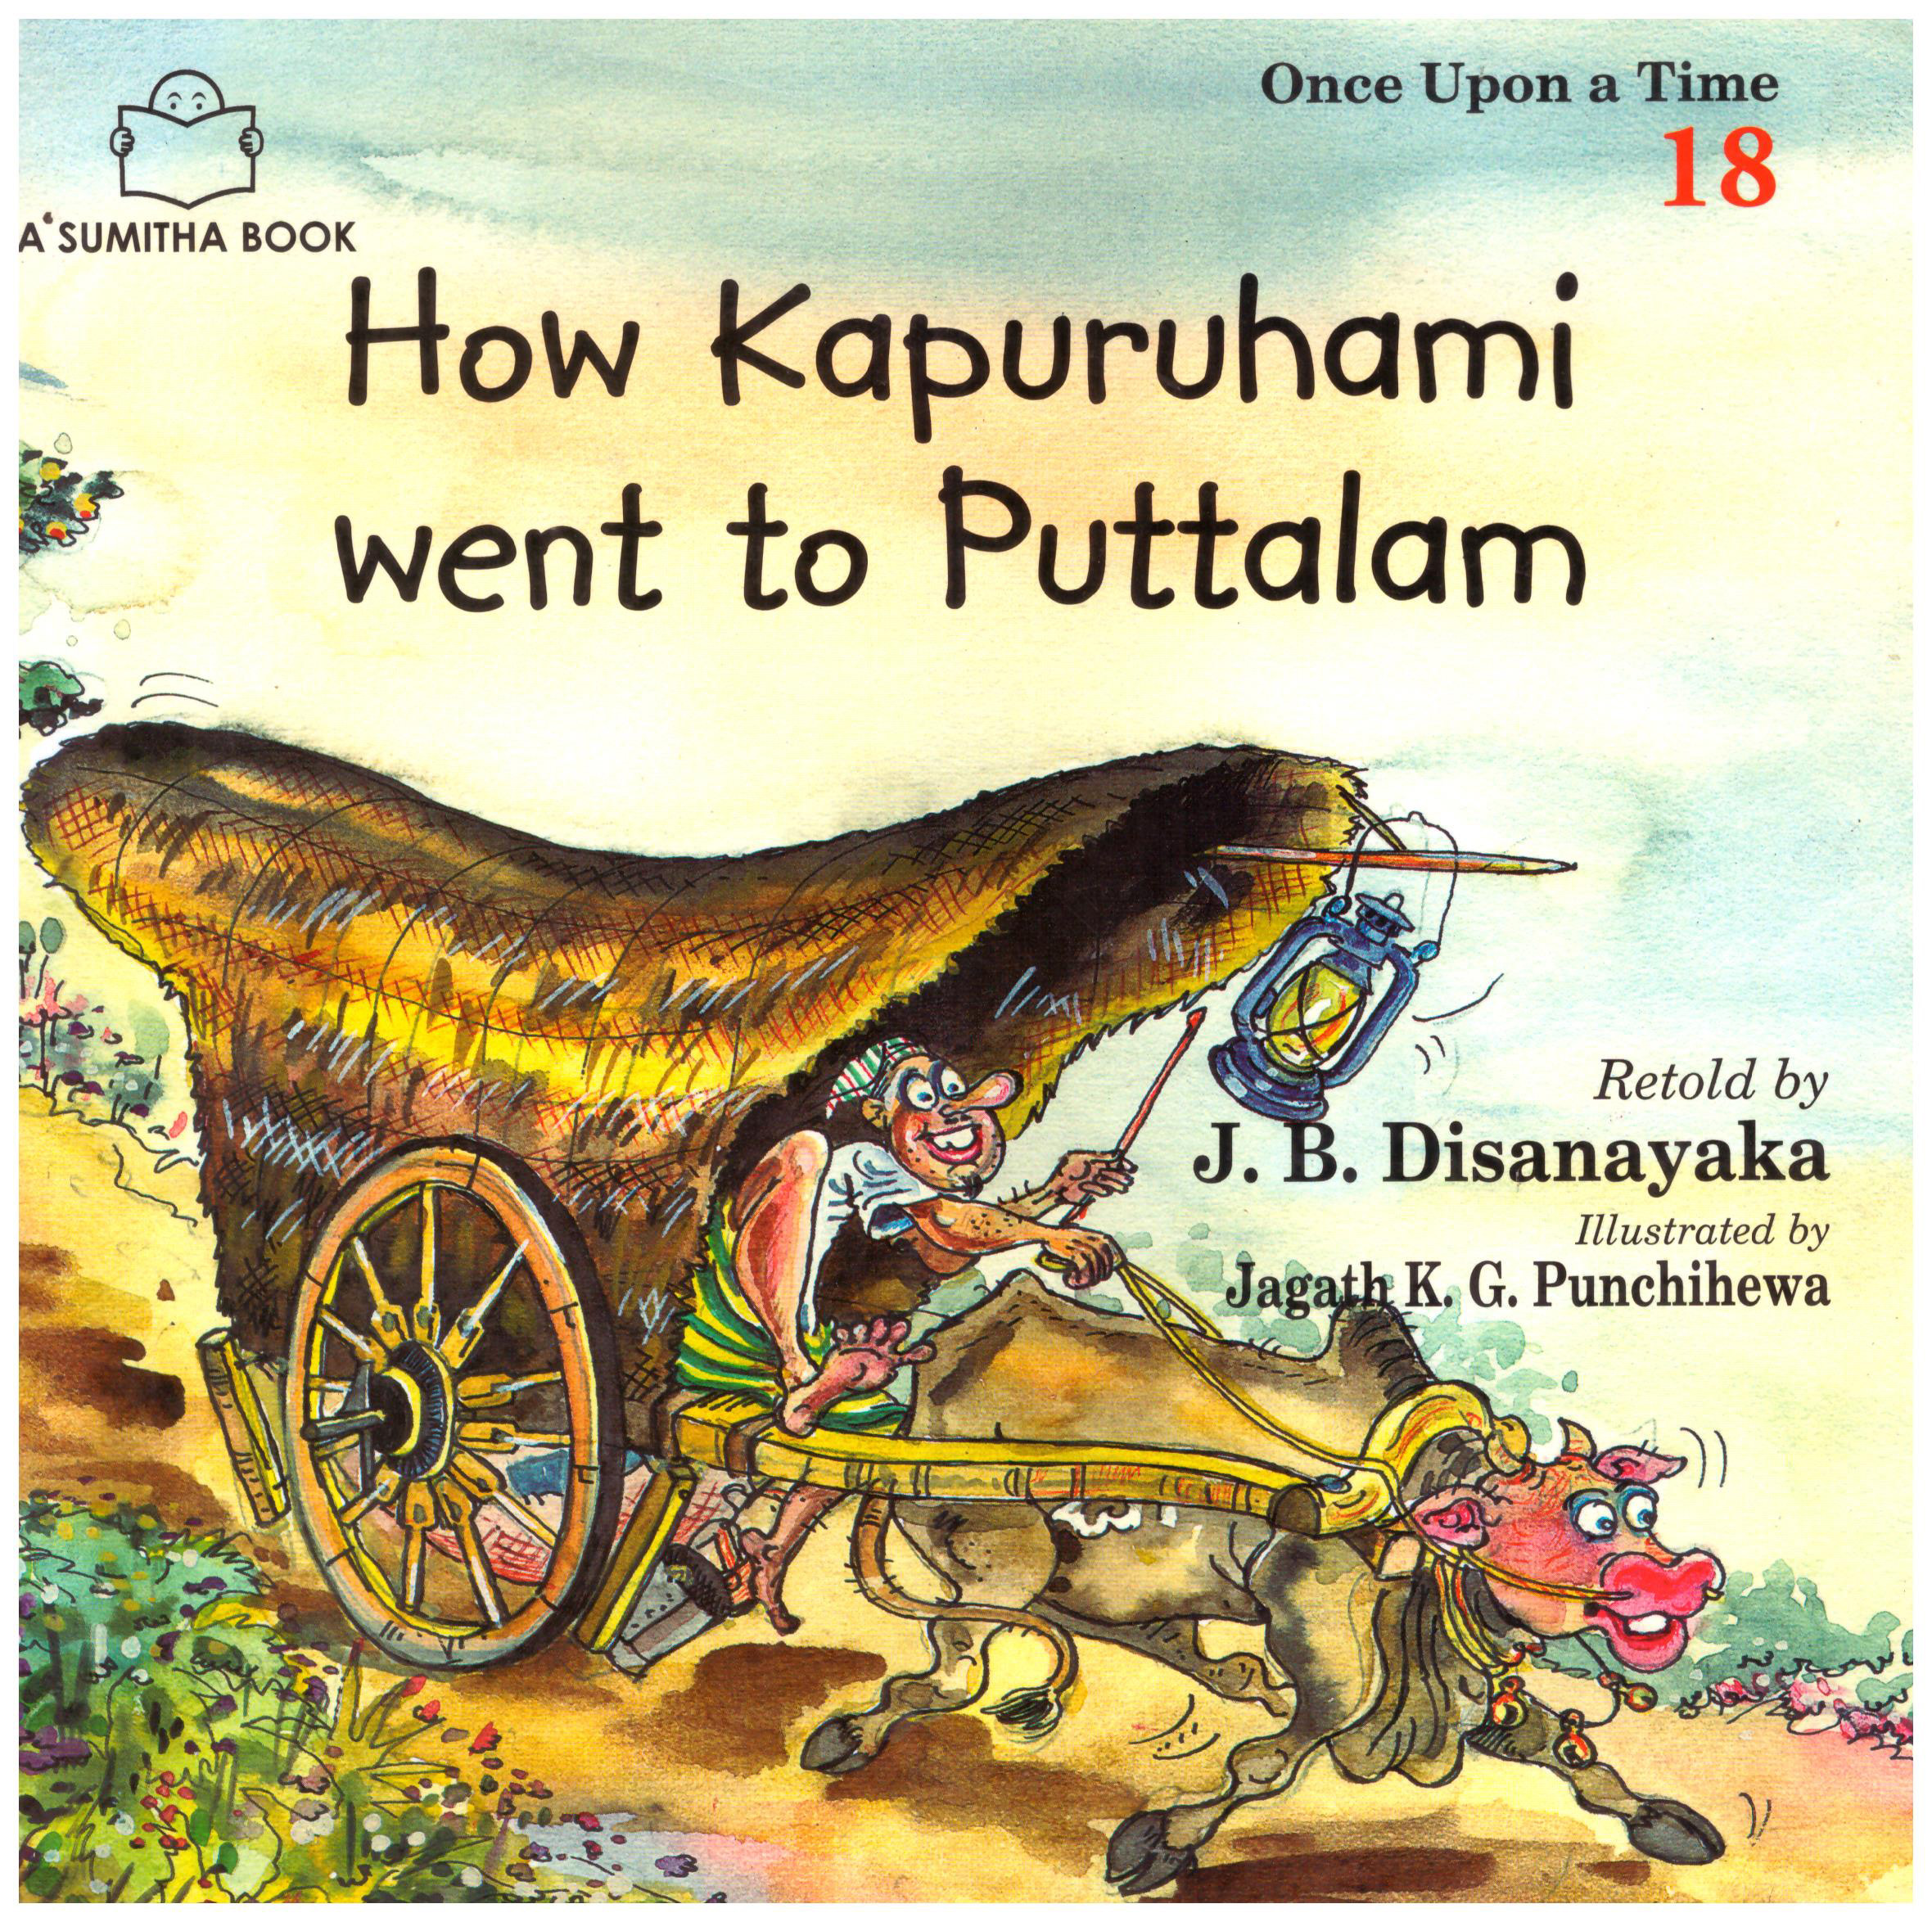 How kapuruhami Went to Puttalam